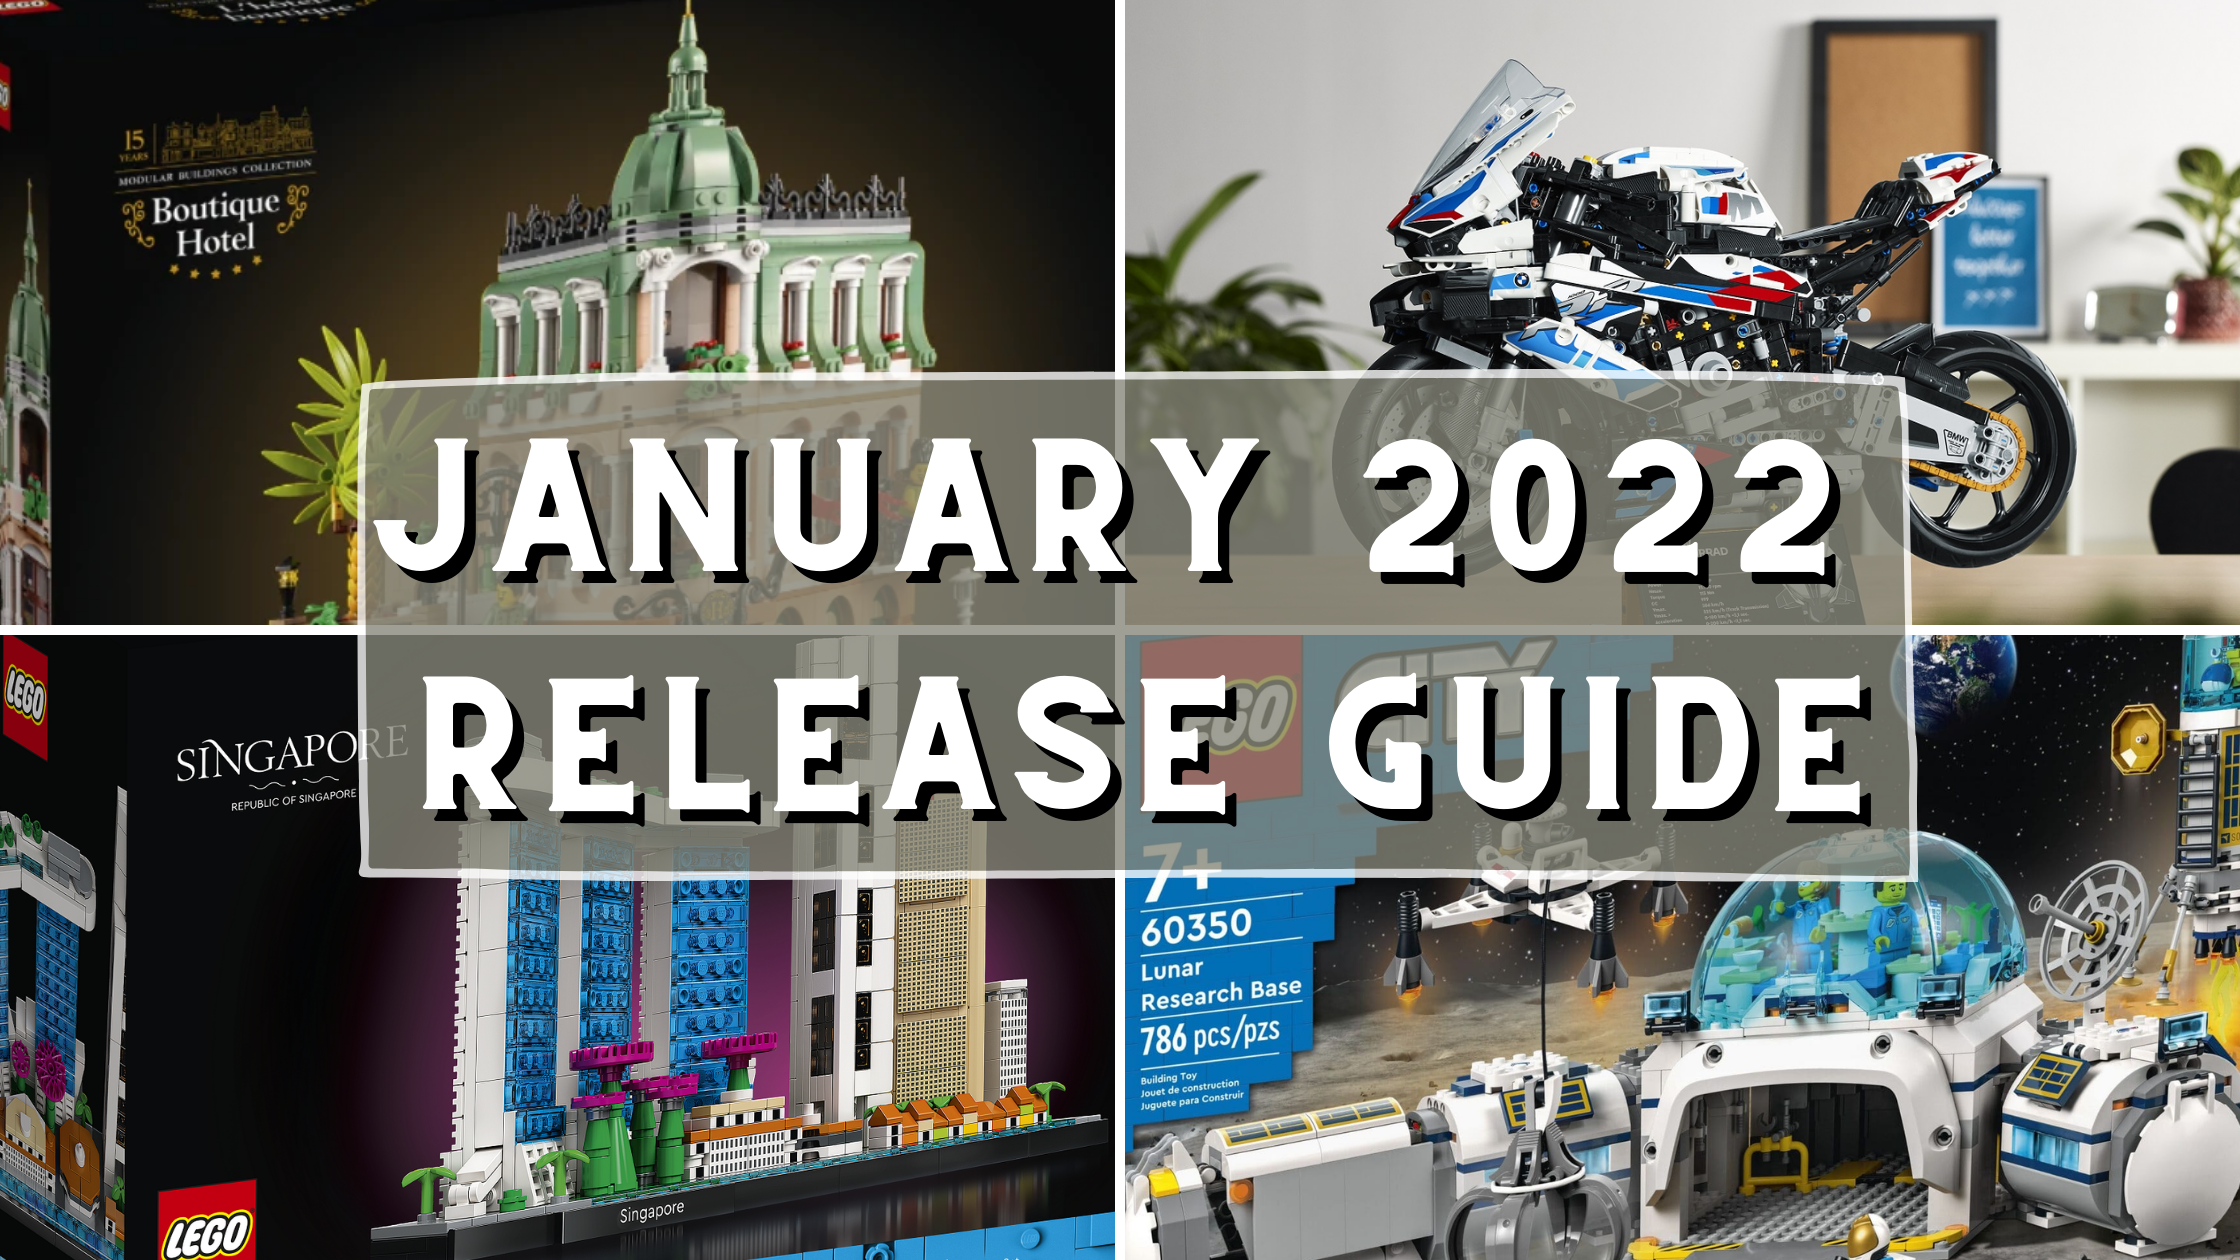 Lego Calendar February 2022 Lego February 2022 New Release Guide - Jay's Brick Blog